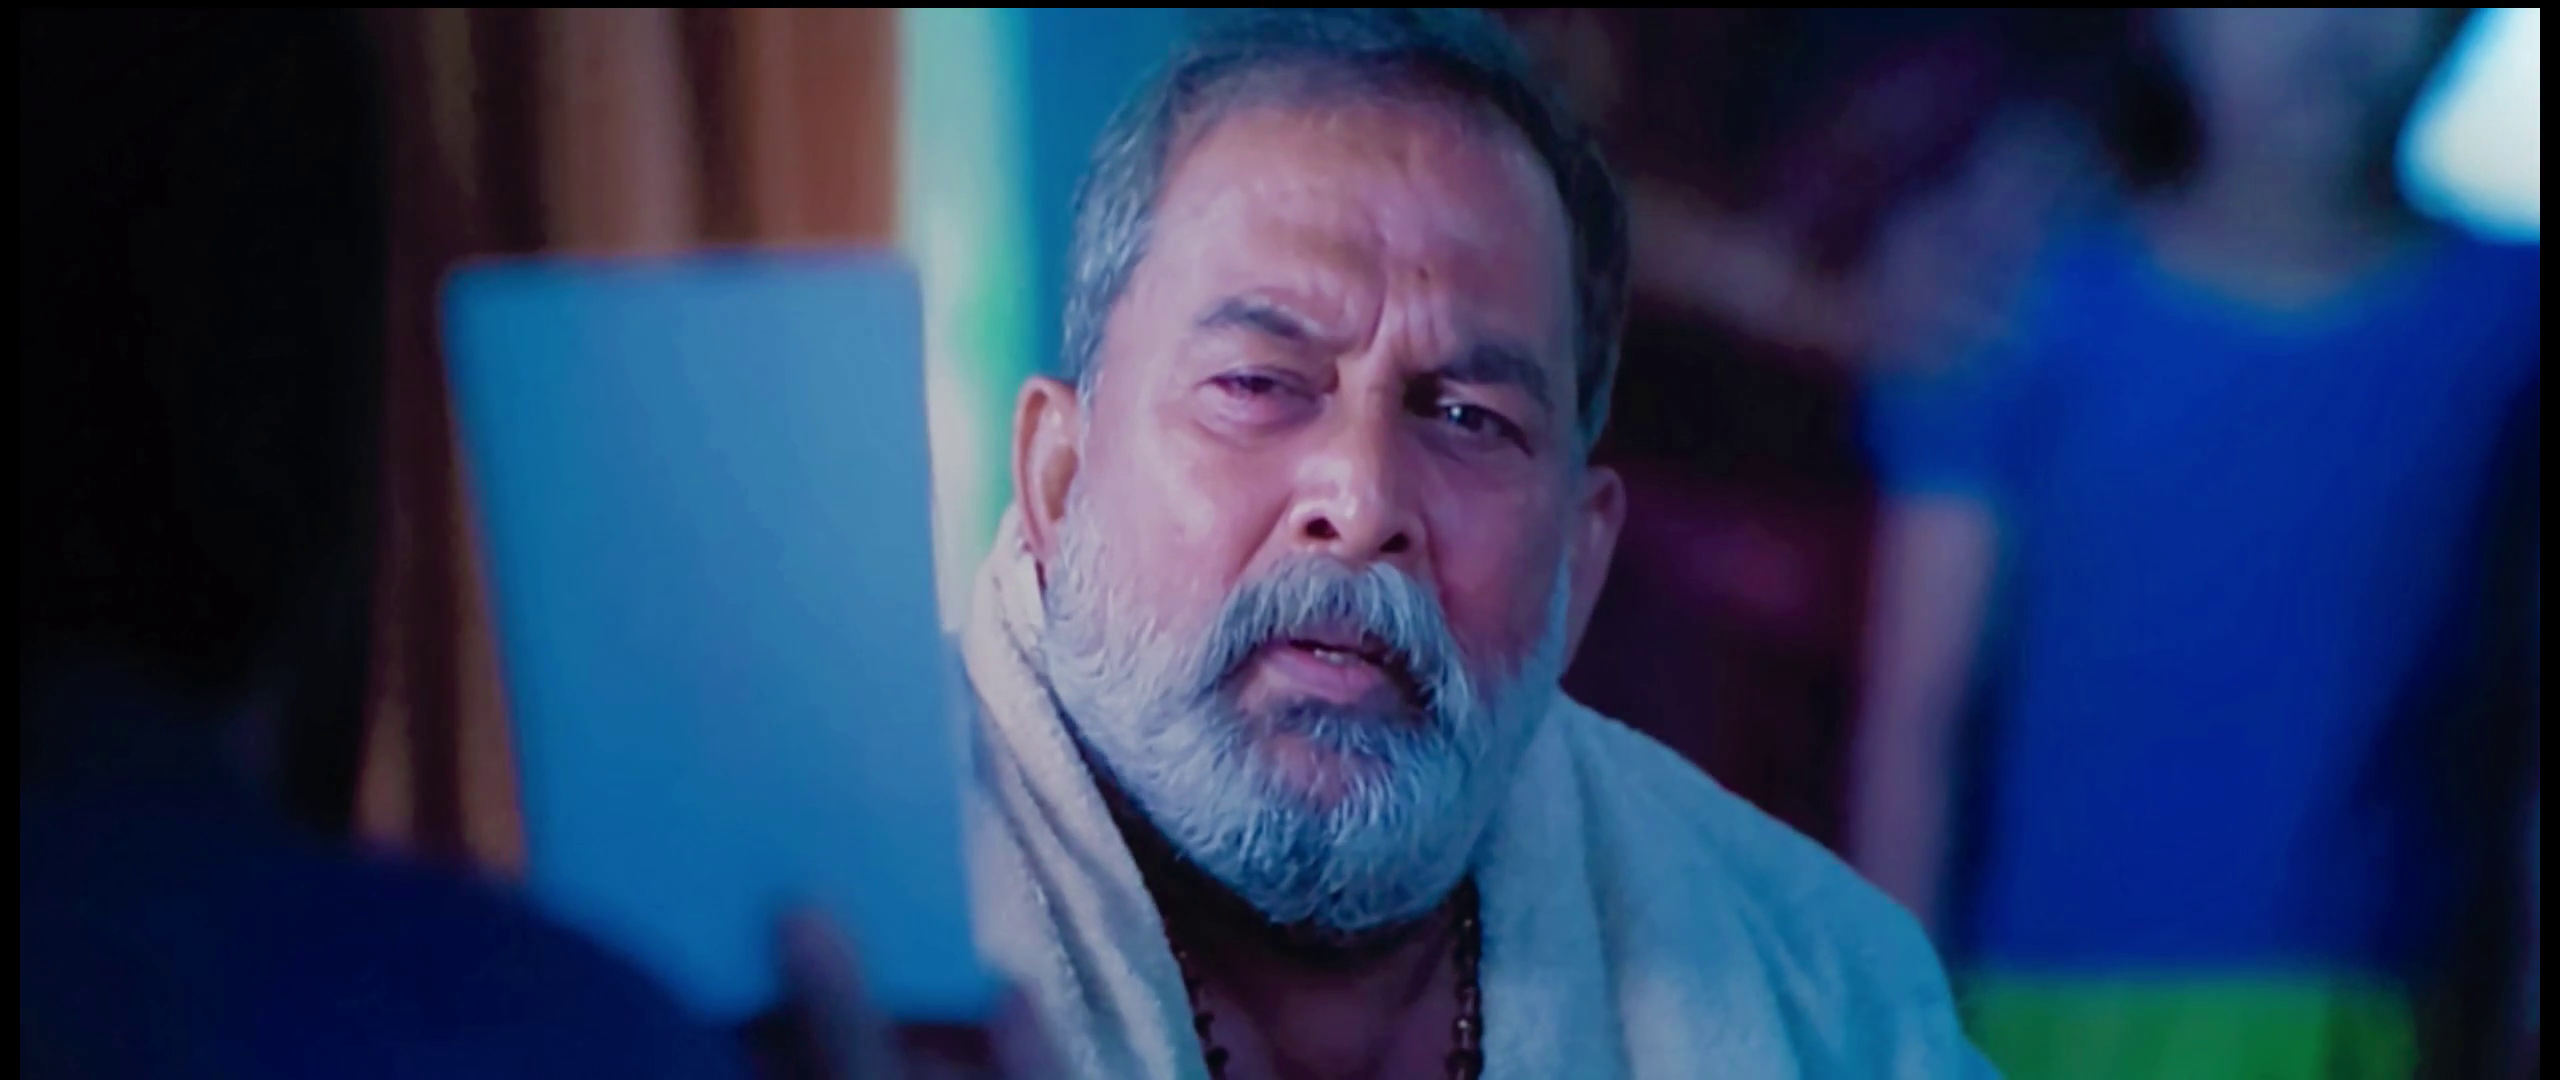 Ramarao on Duty (2022) Telugu 1080p Pre-DVD x264-TMV